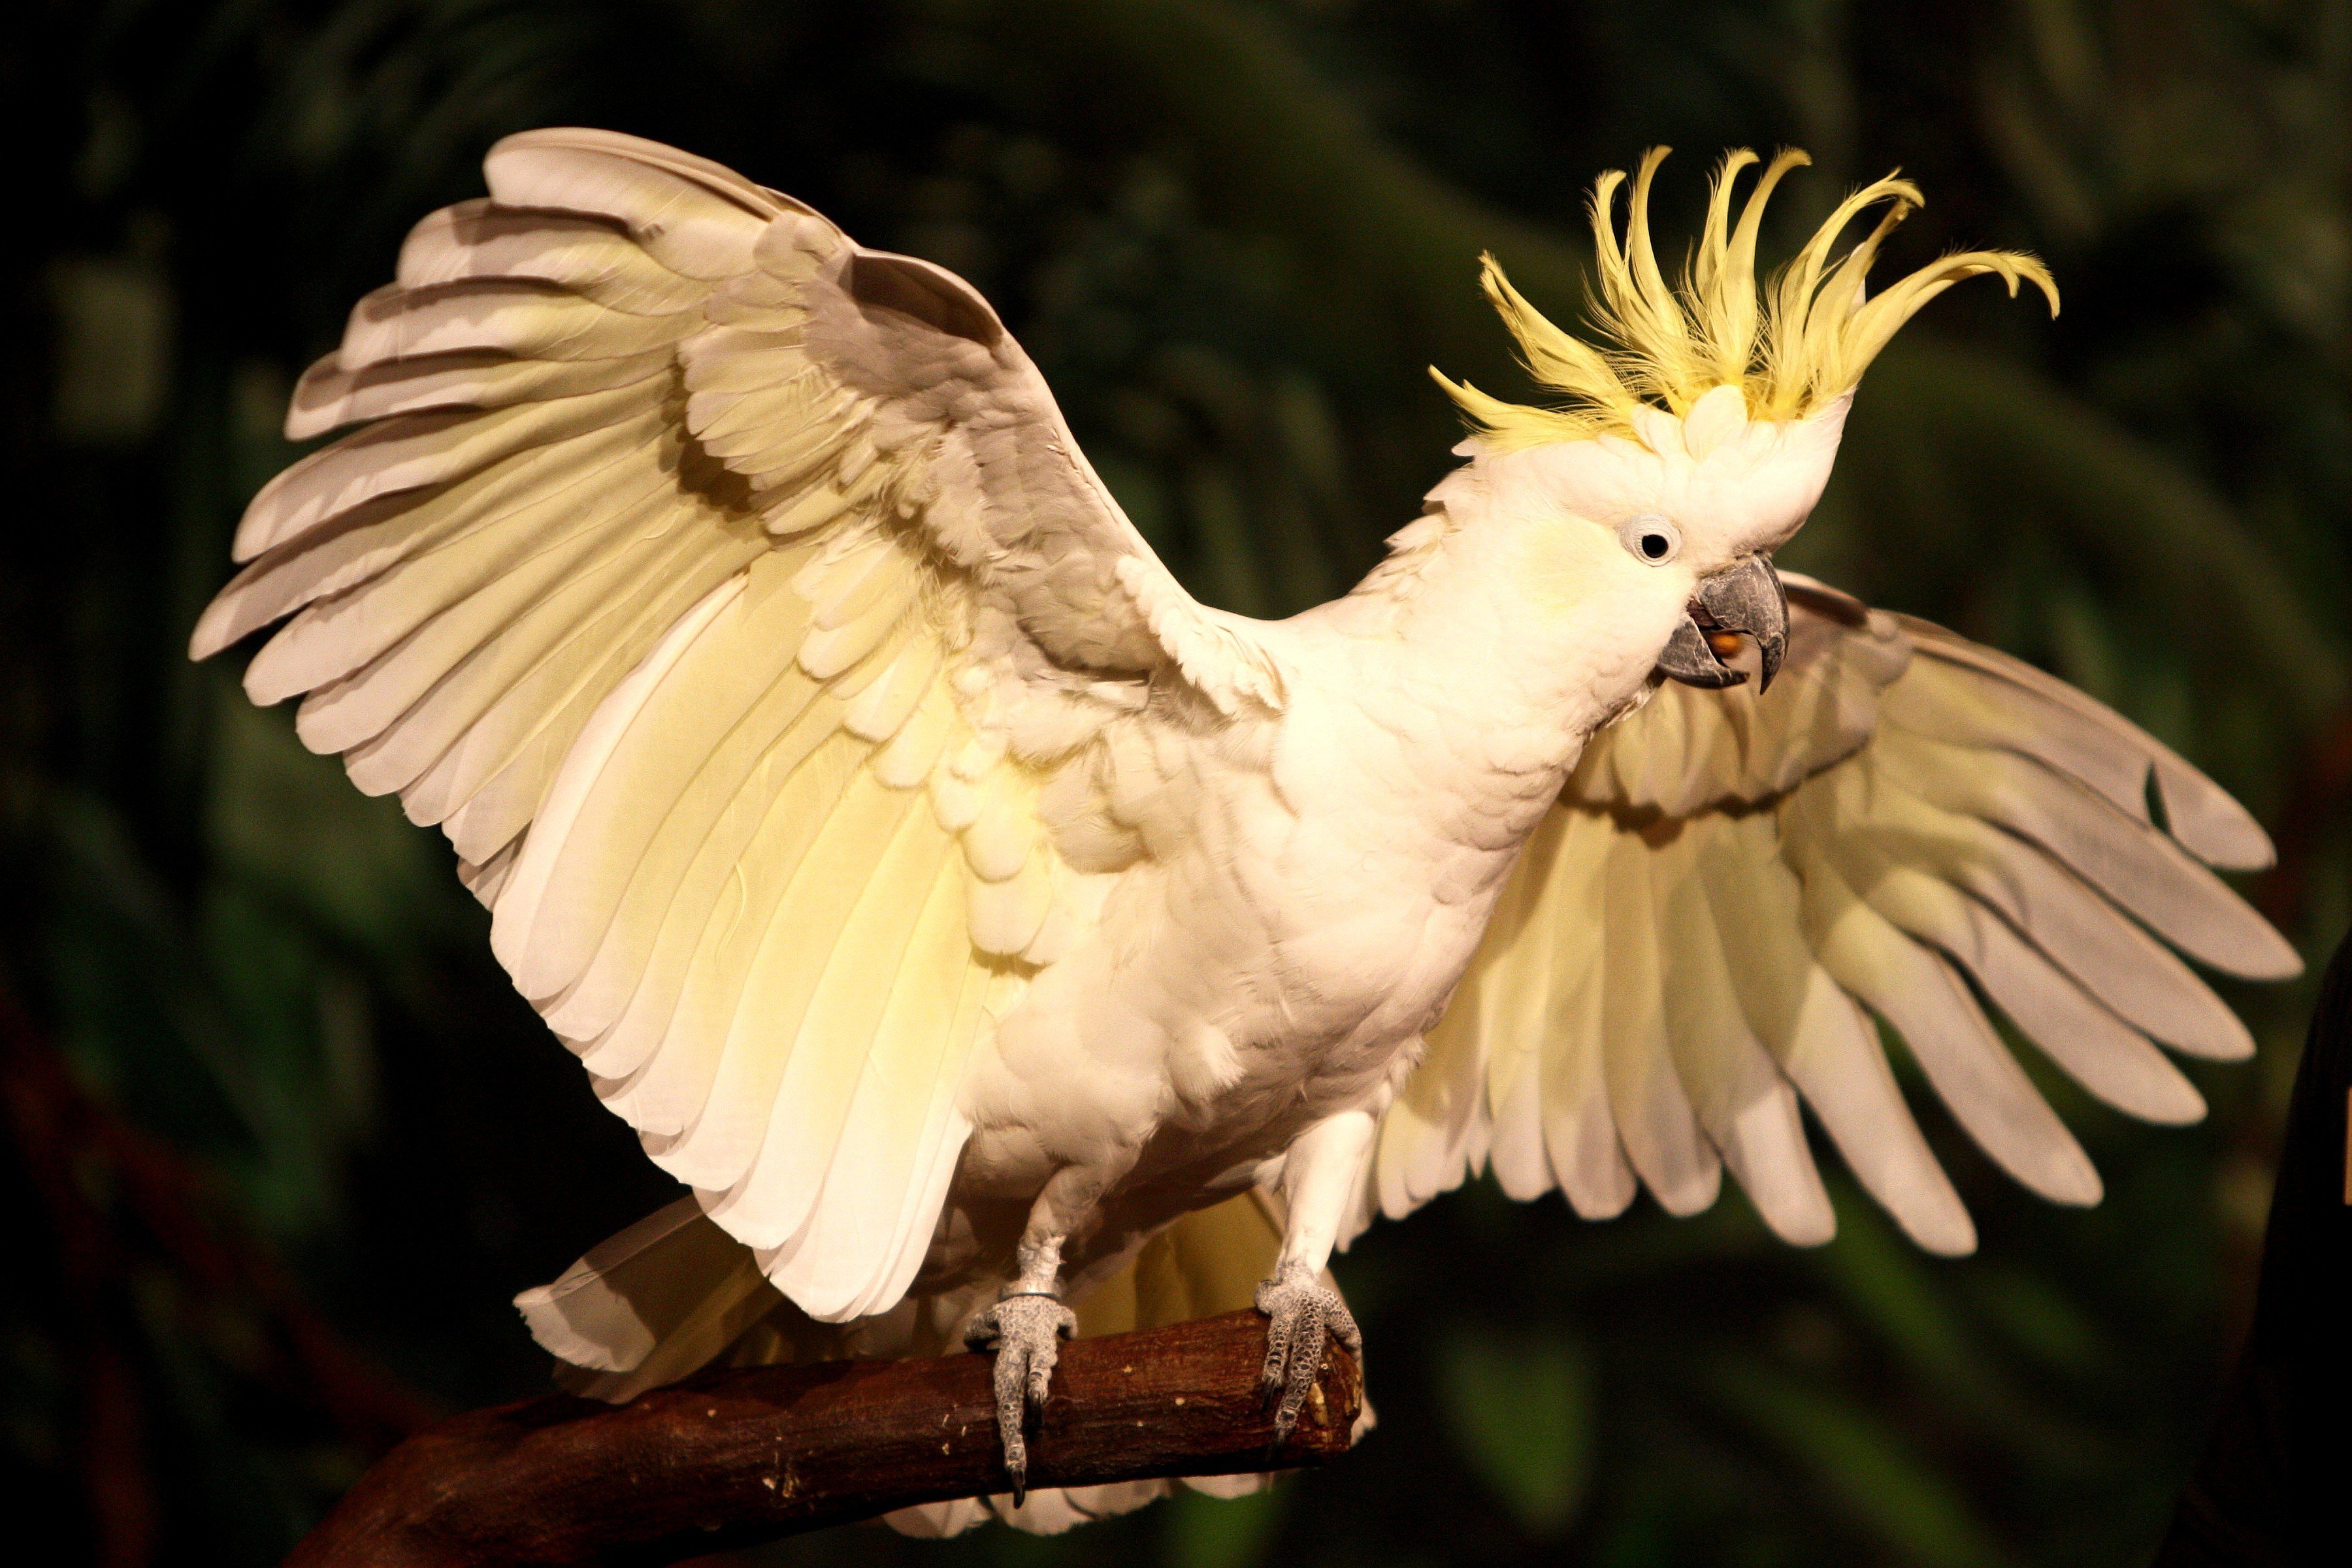 white cockatoo parrot